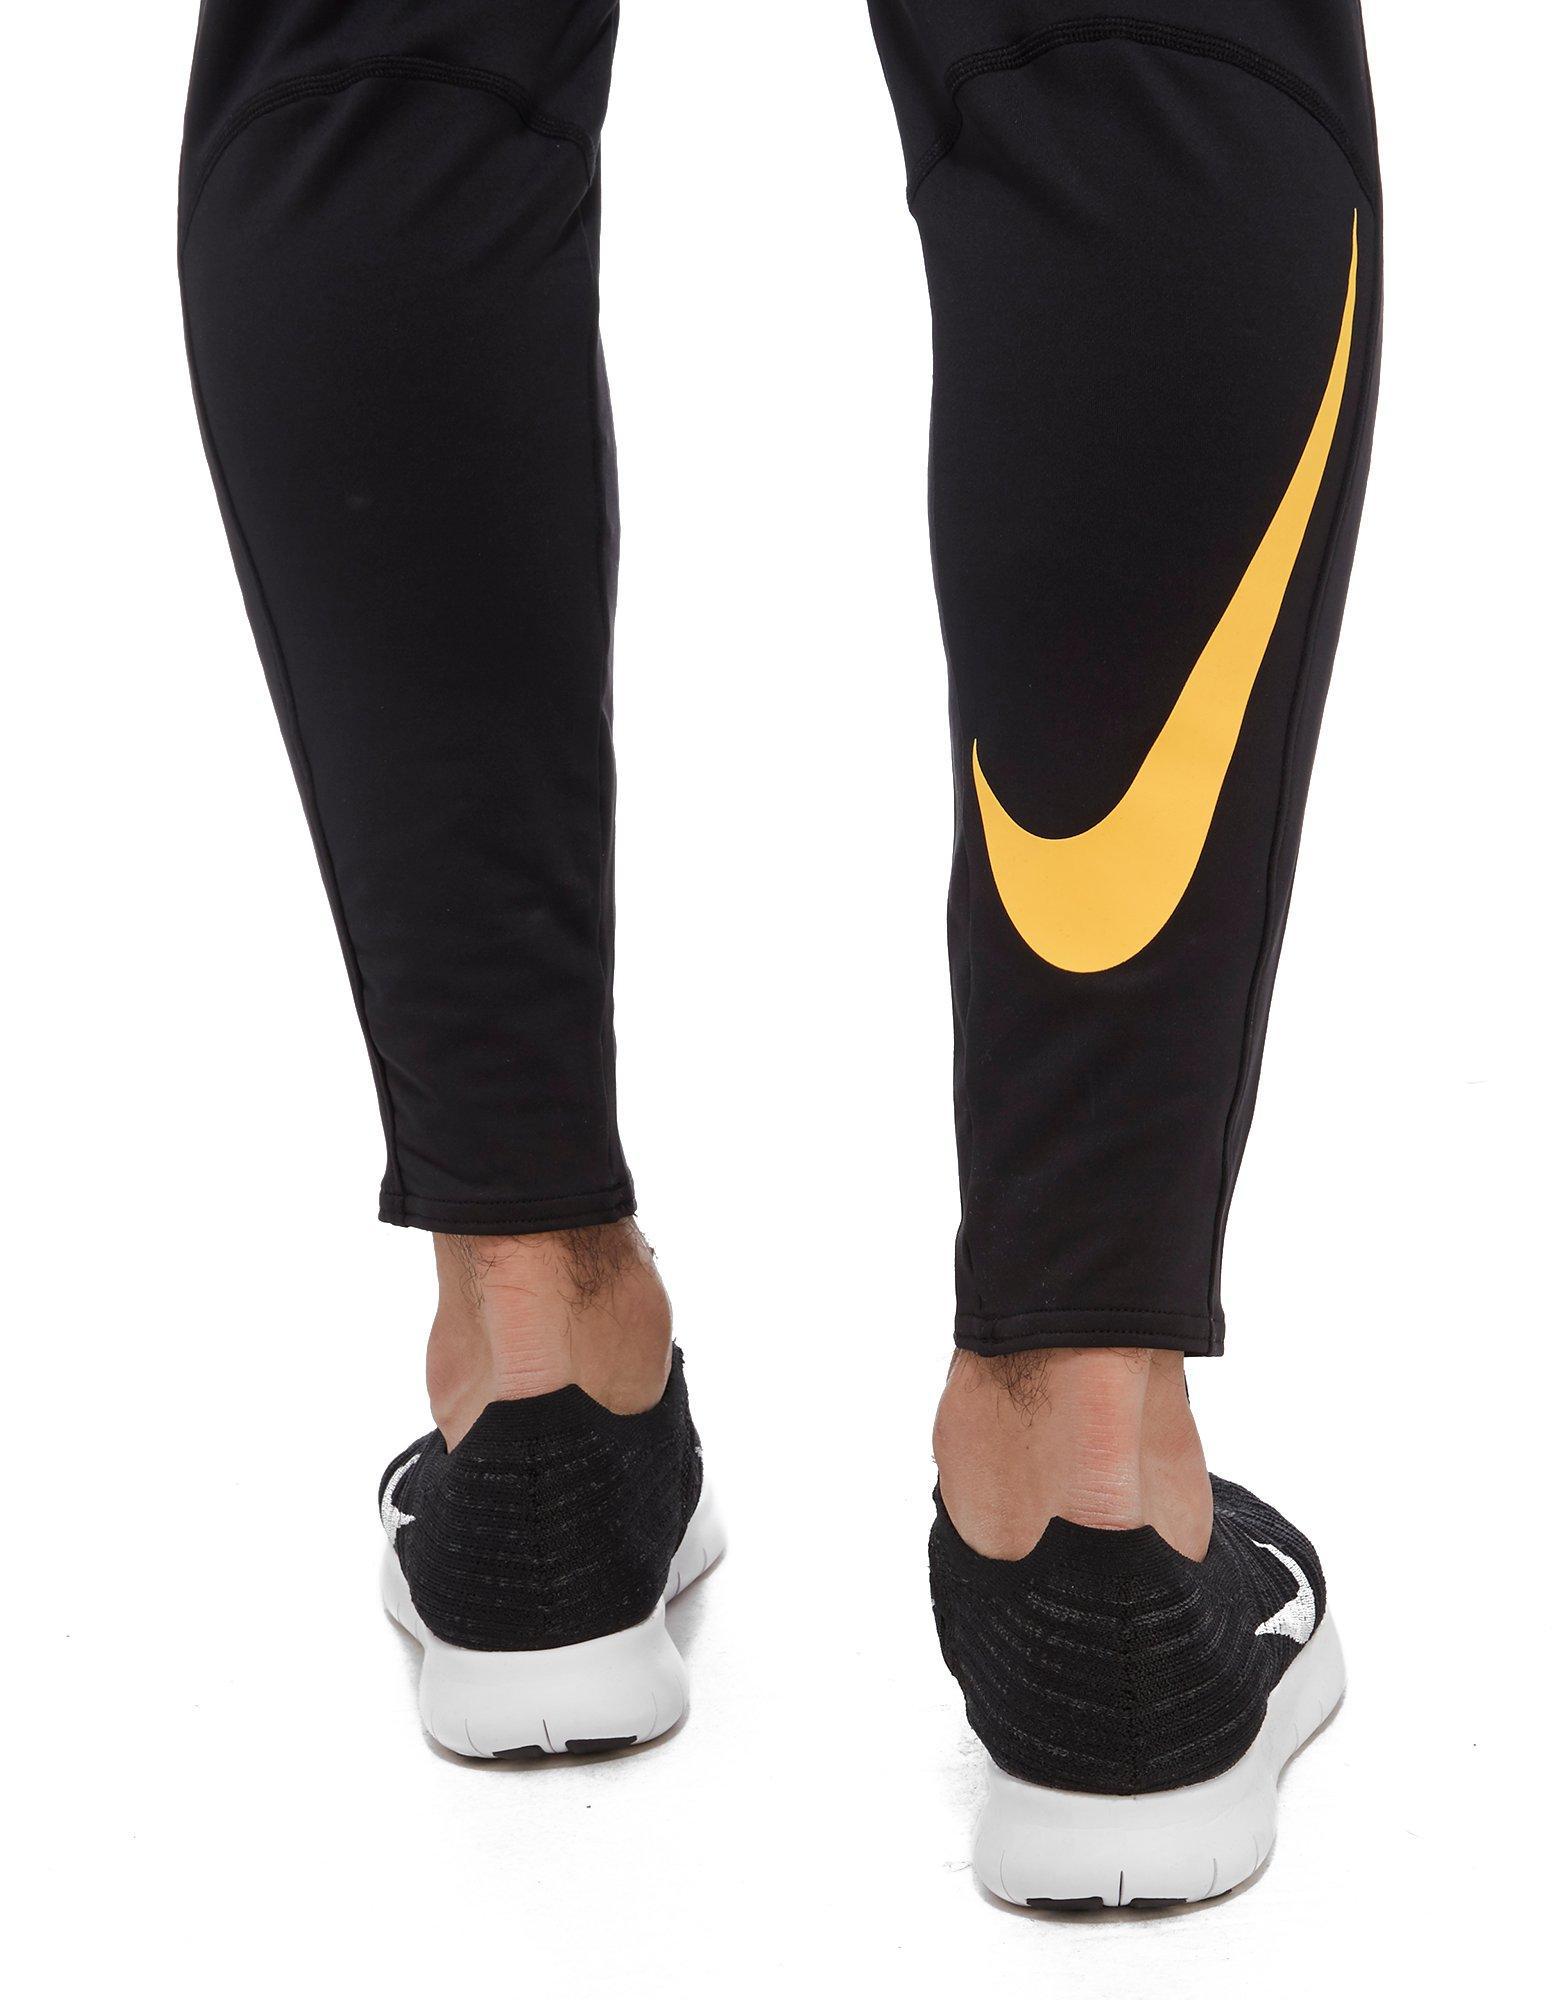 Nike Synthetic Dry Squad Football Pants in Black/Orange (Black) for Men -  Lyst